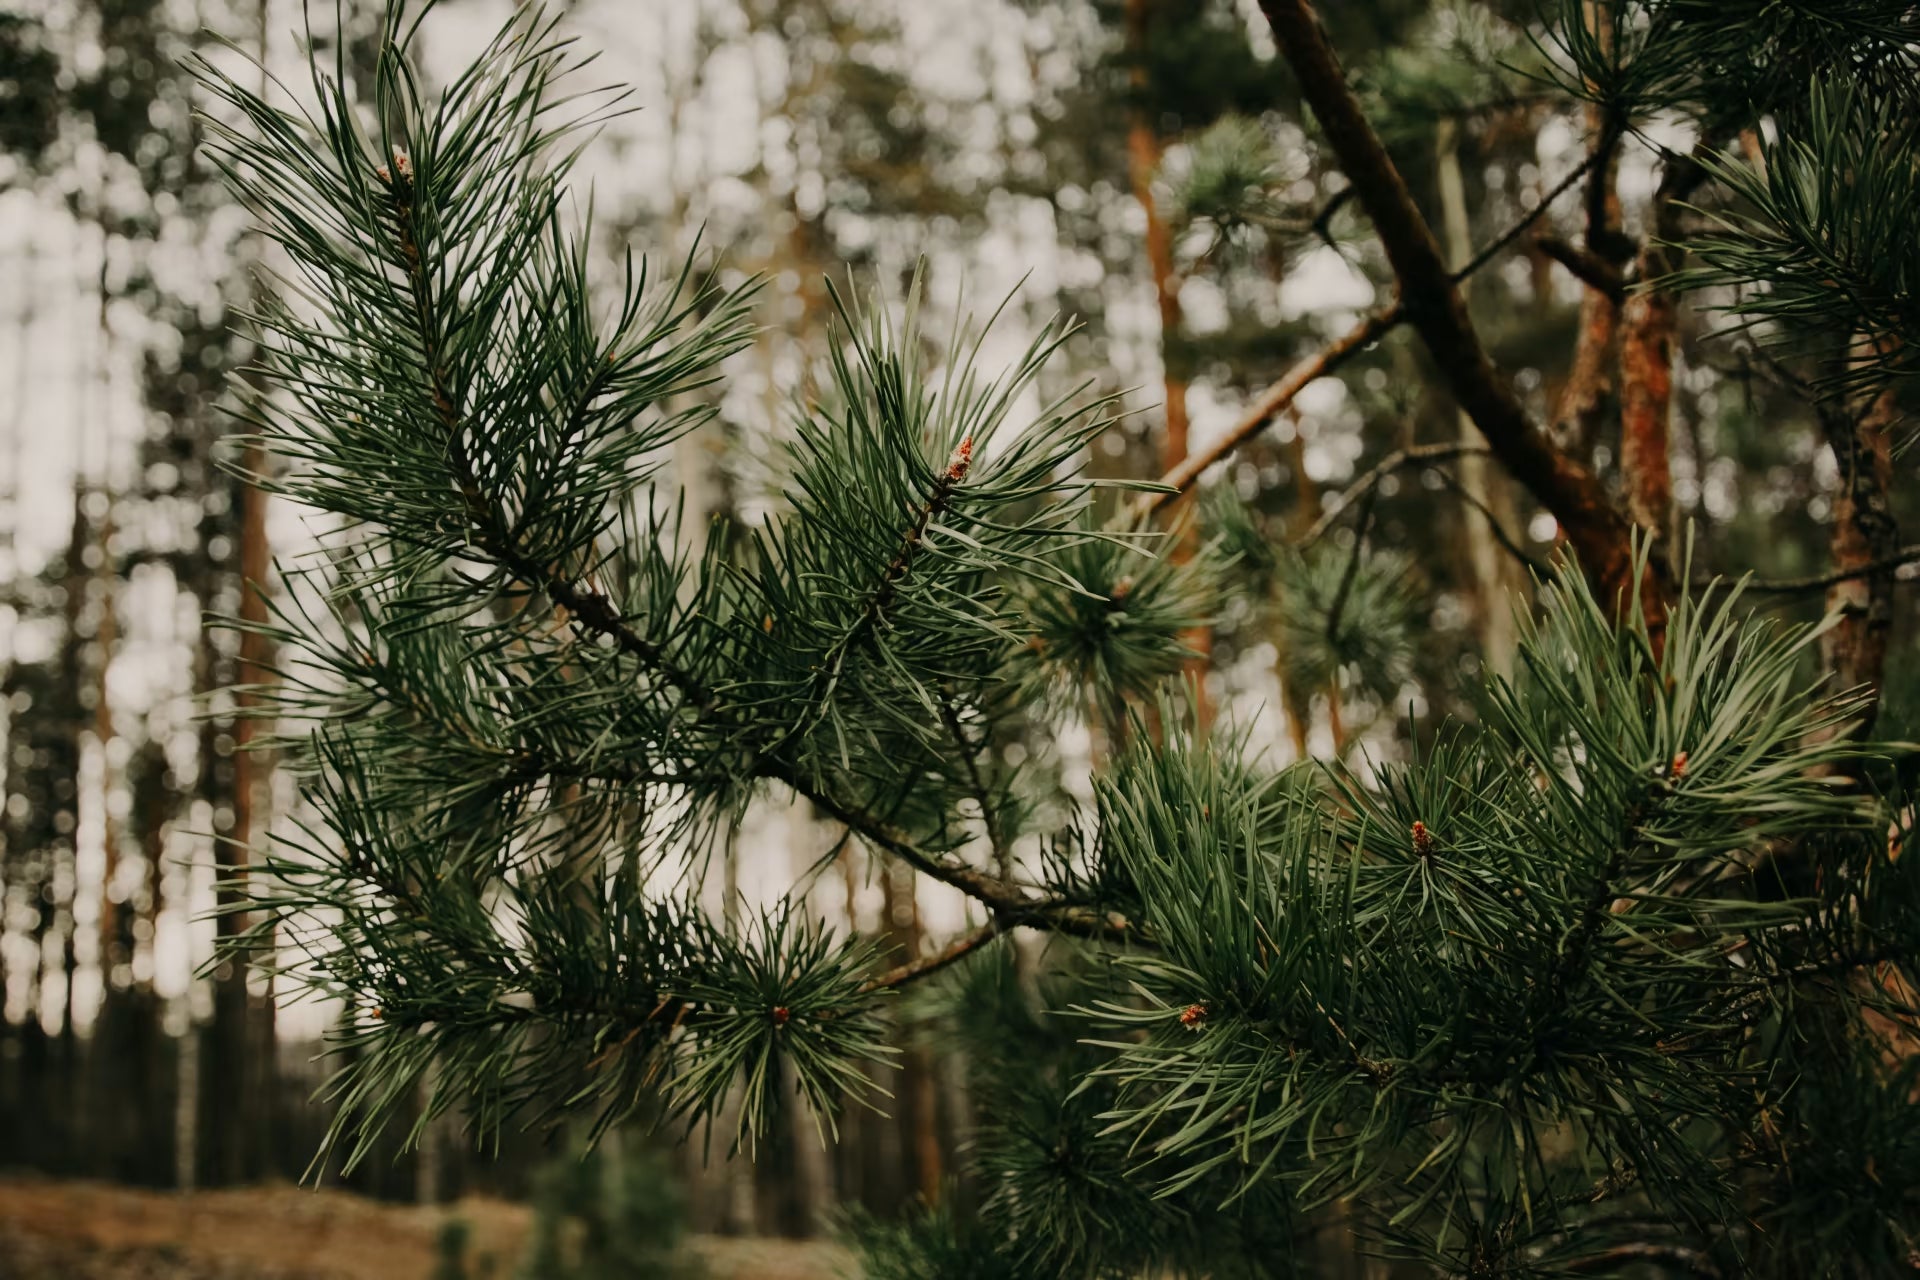 Is It Pine, Spruce, or Fir?